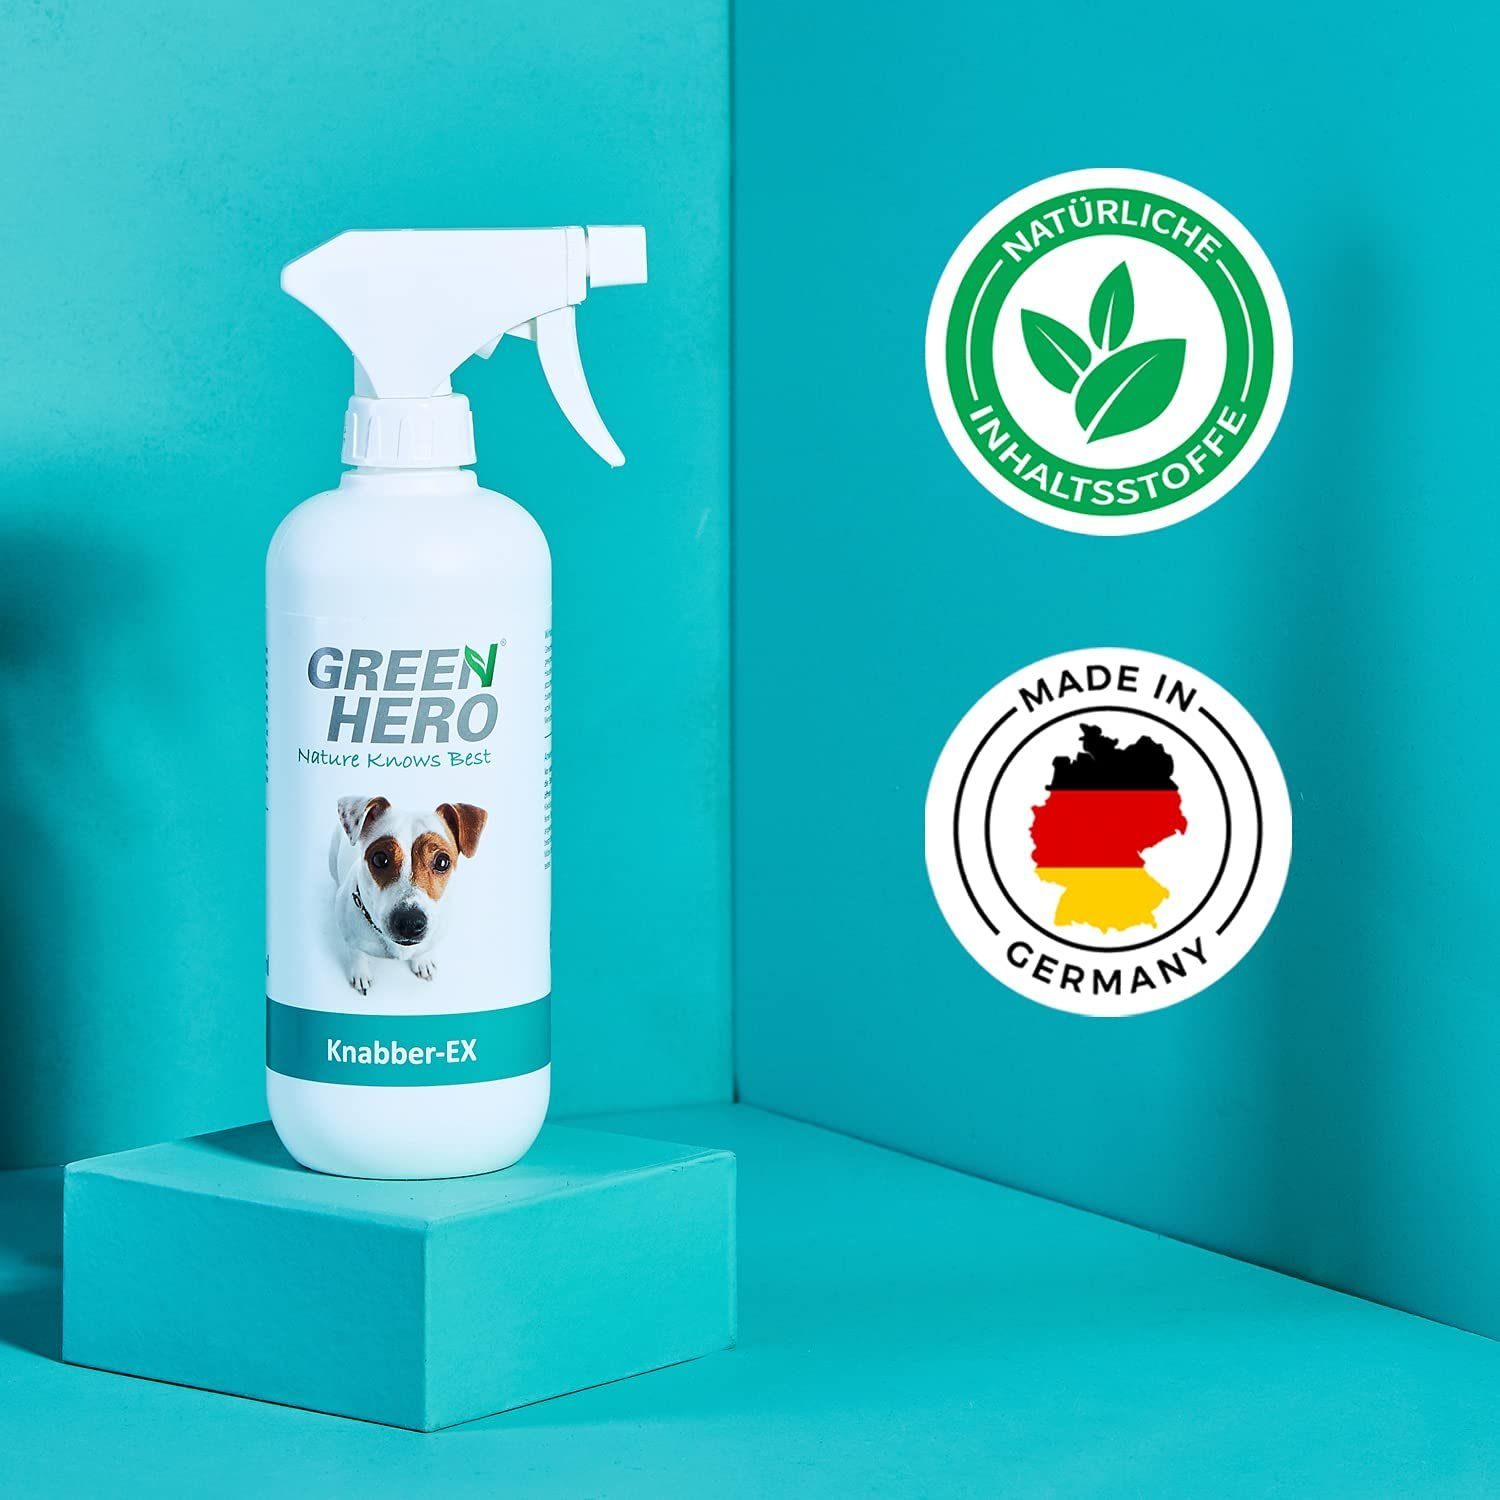 Gardigo Hunde-Katzen-Verdufter-Spray 500 ml